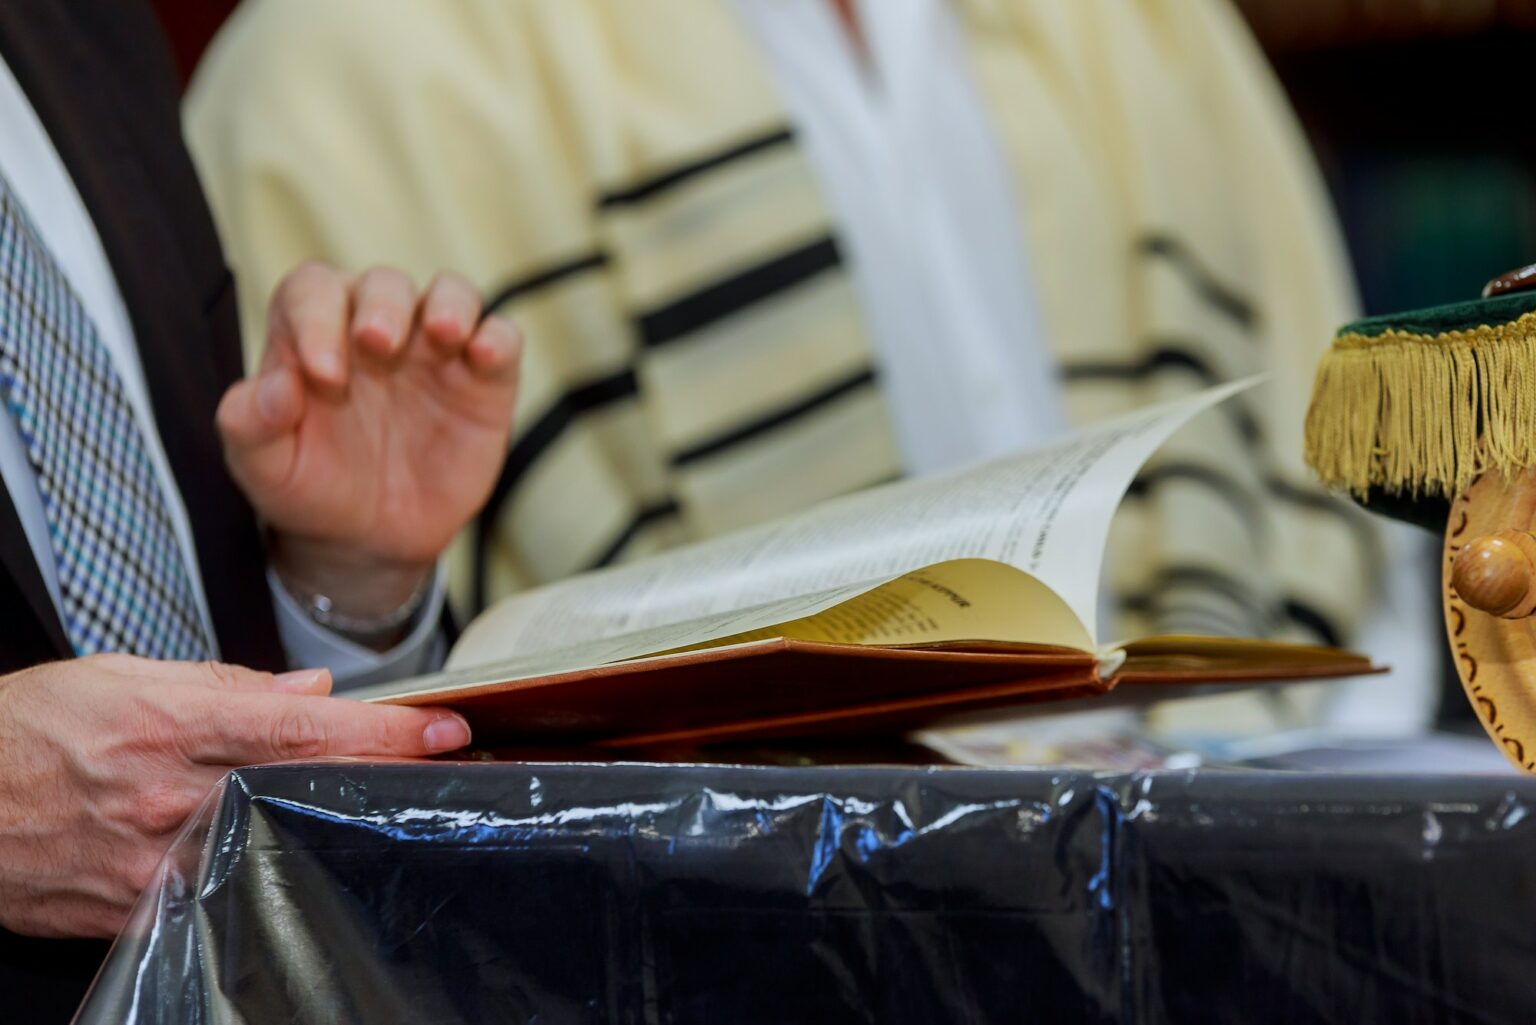 Prayer shawl Tallit Jewish religious symbol and Barmitzvah Jewish Prayer